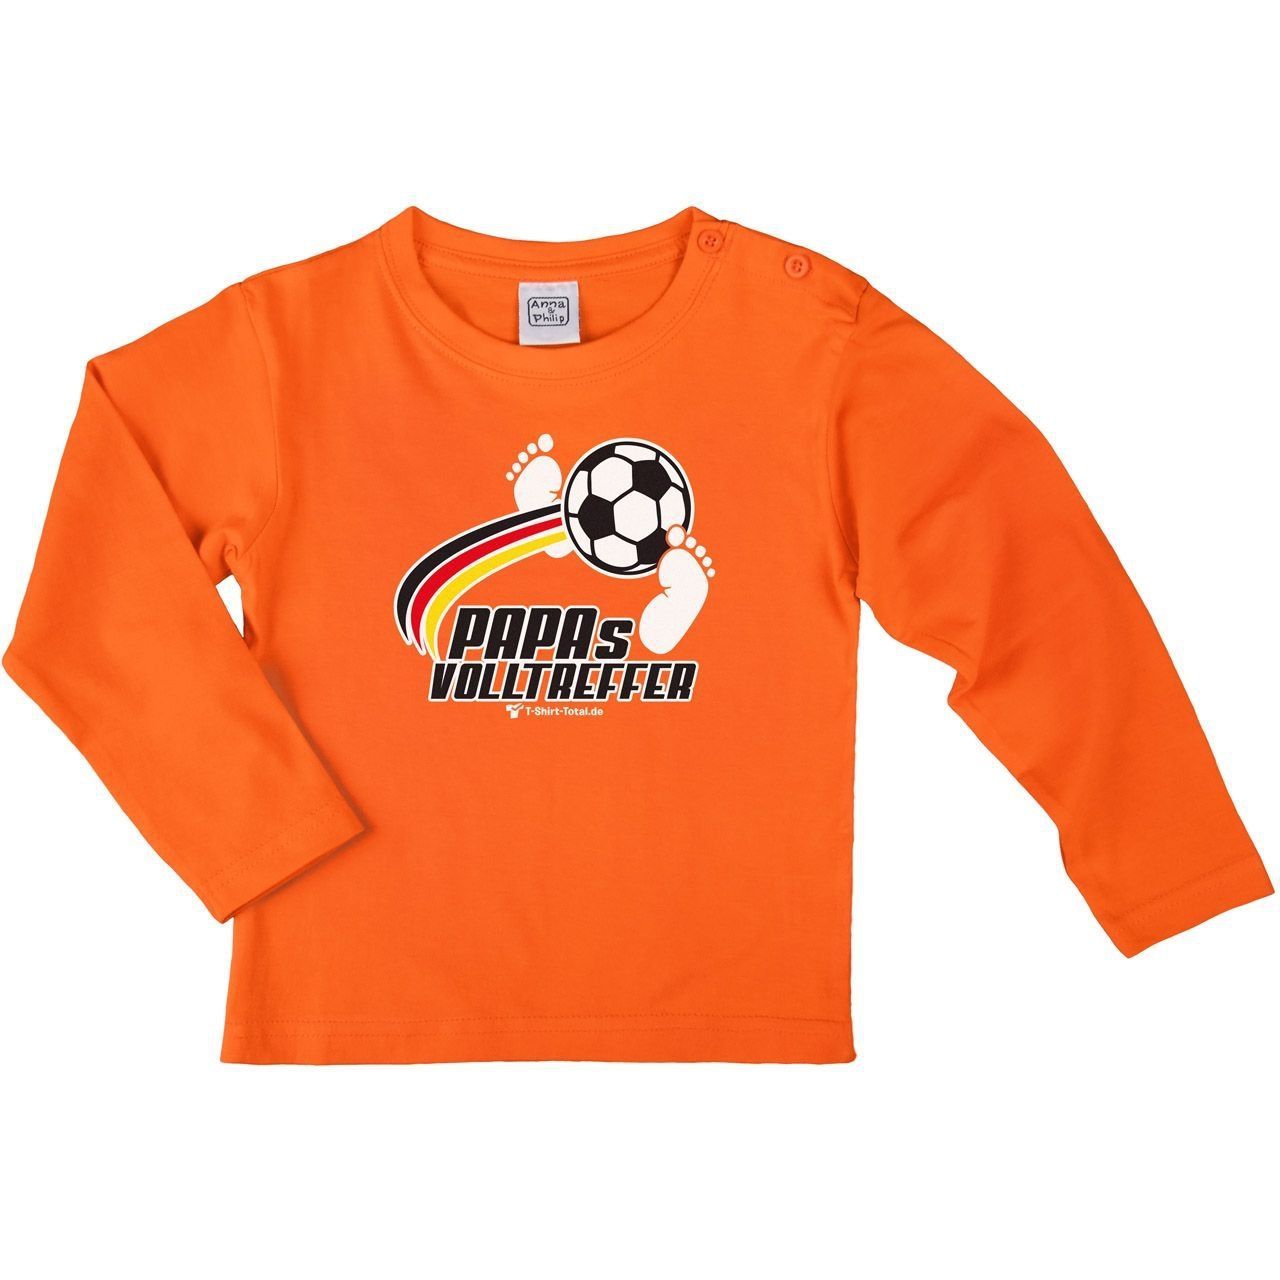 Papas Volltreffer Kinder Langarm Shirt orange 56 / 62